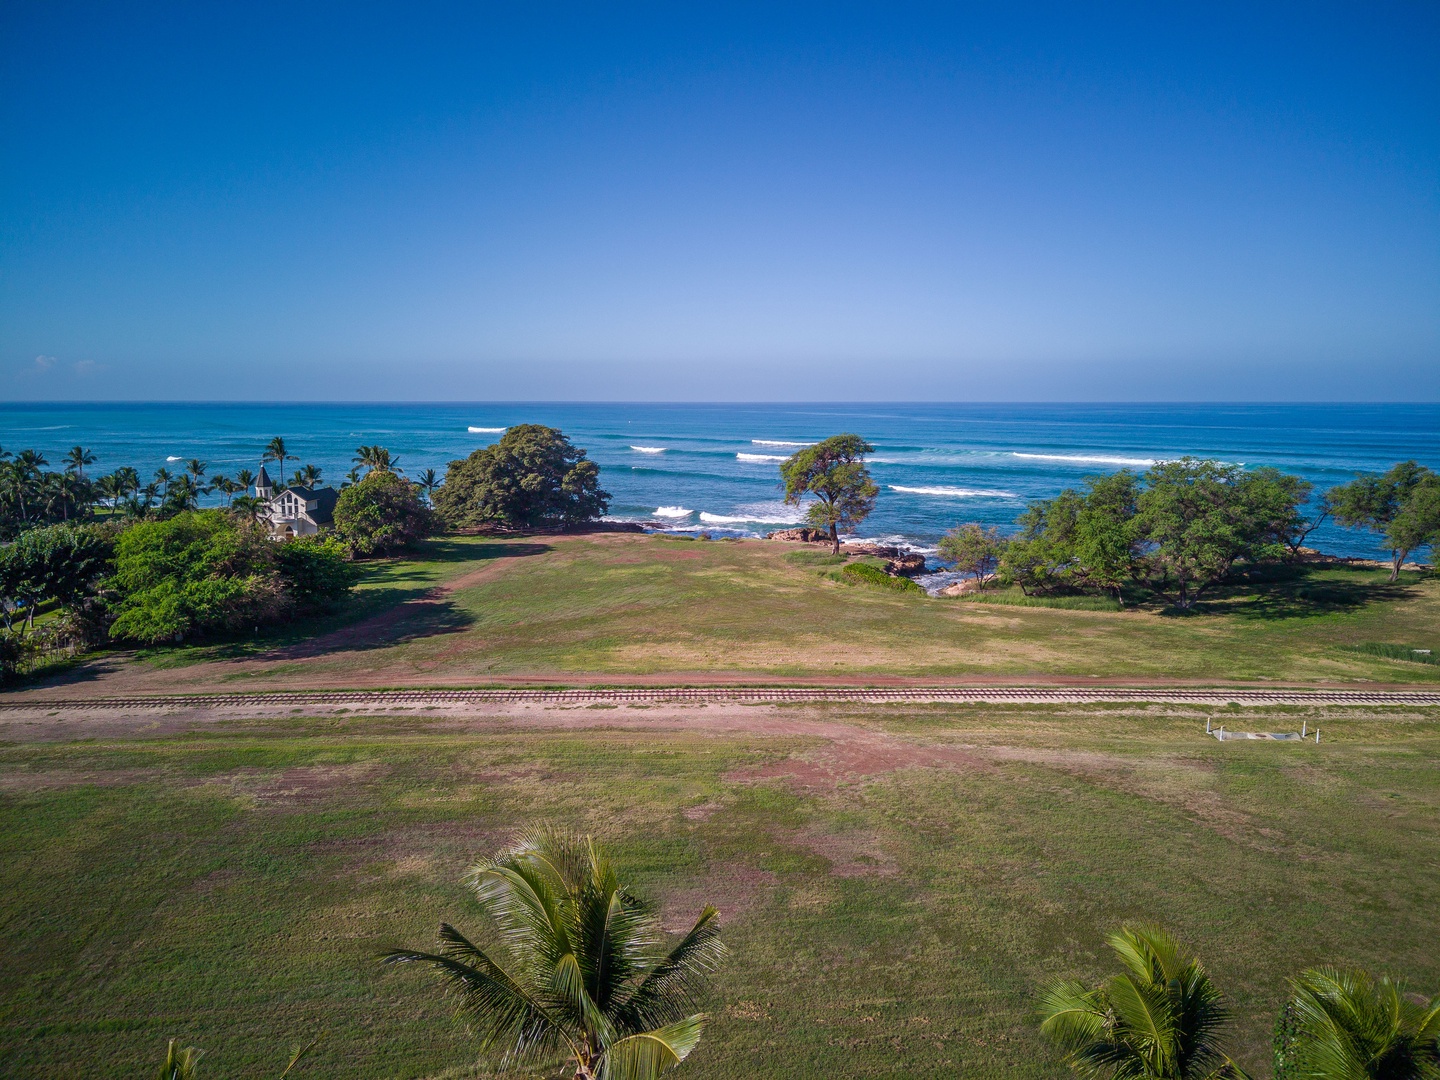 Kapolei Vacation Rentals, Kai Lani 24B - An expansive view of the island.